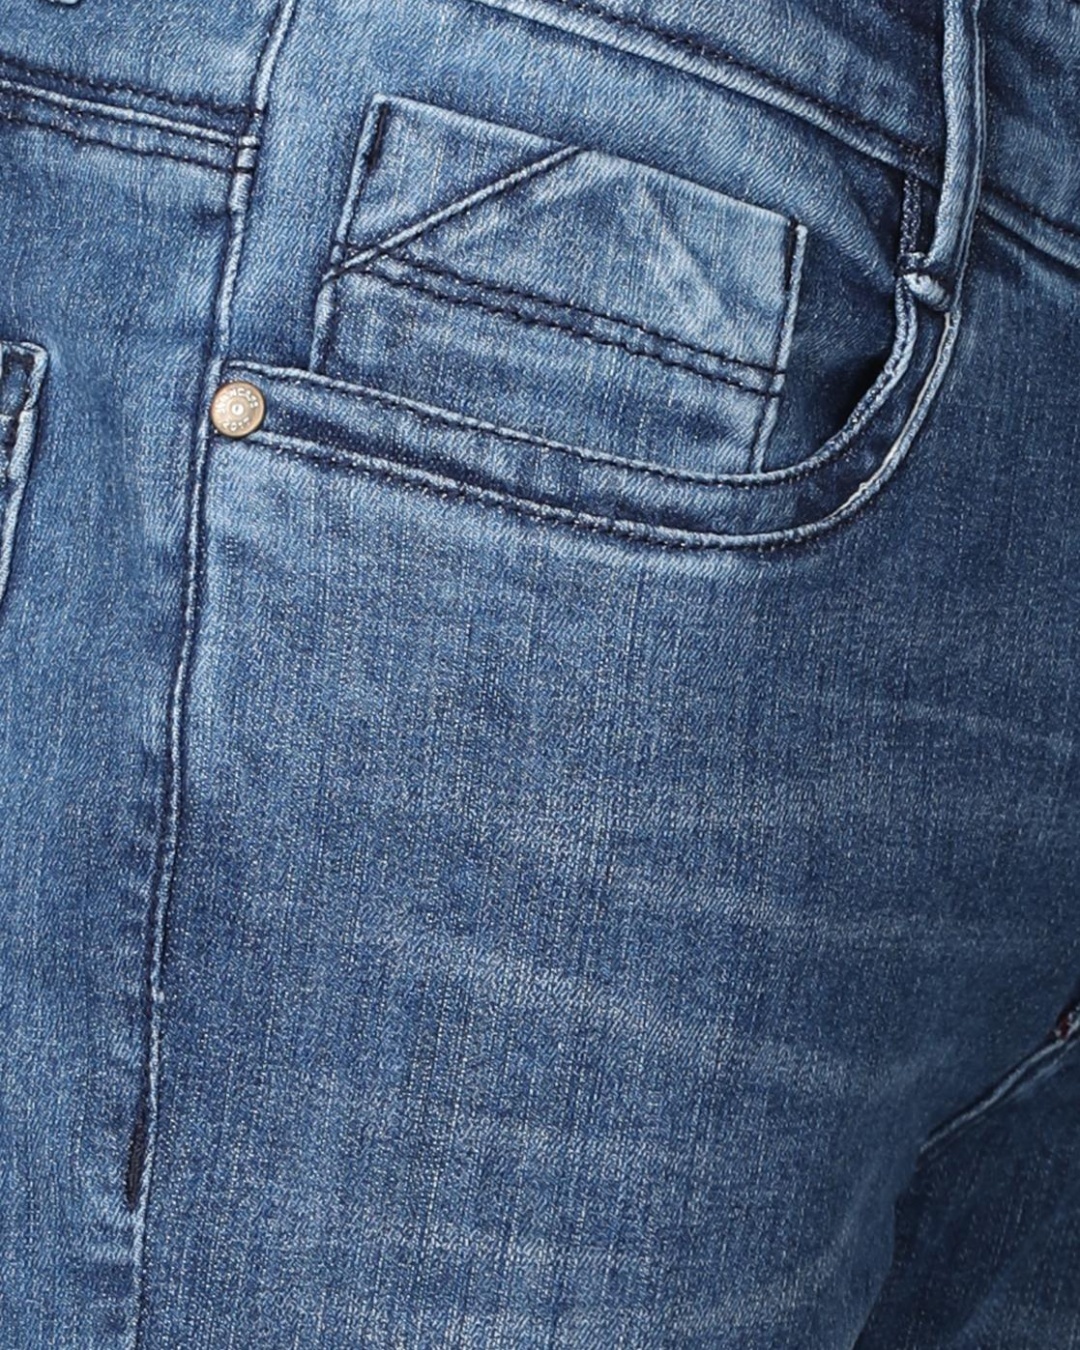 Buy Men's Blue Slim Fit Distressed Jeans for Men Blue Online at Bewakoof